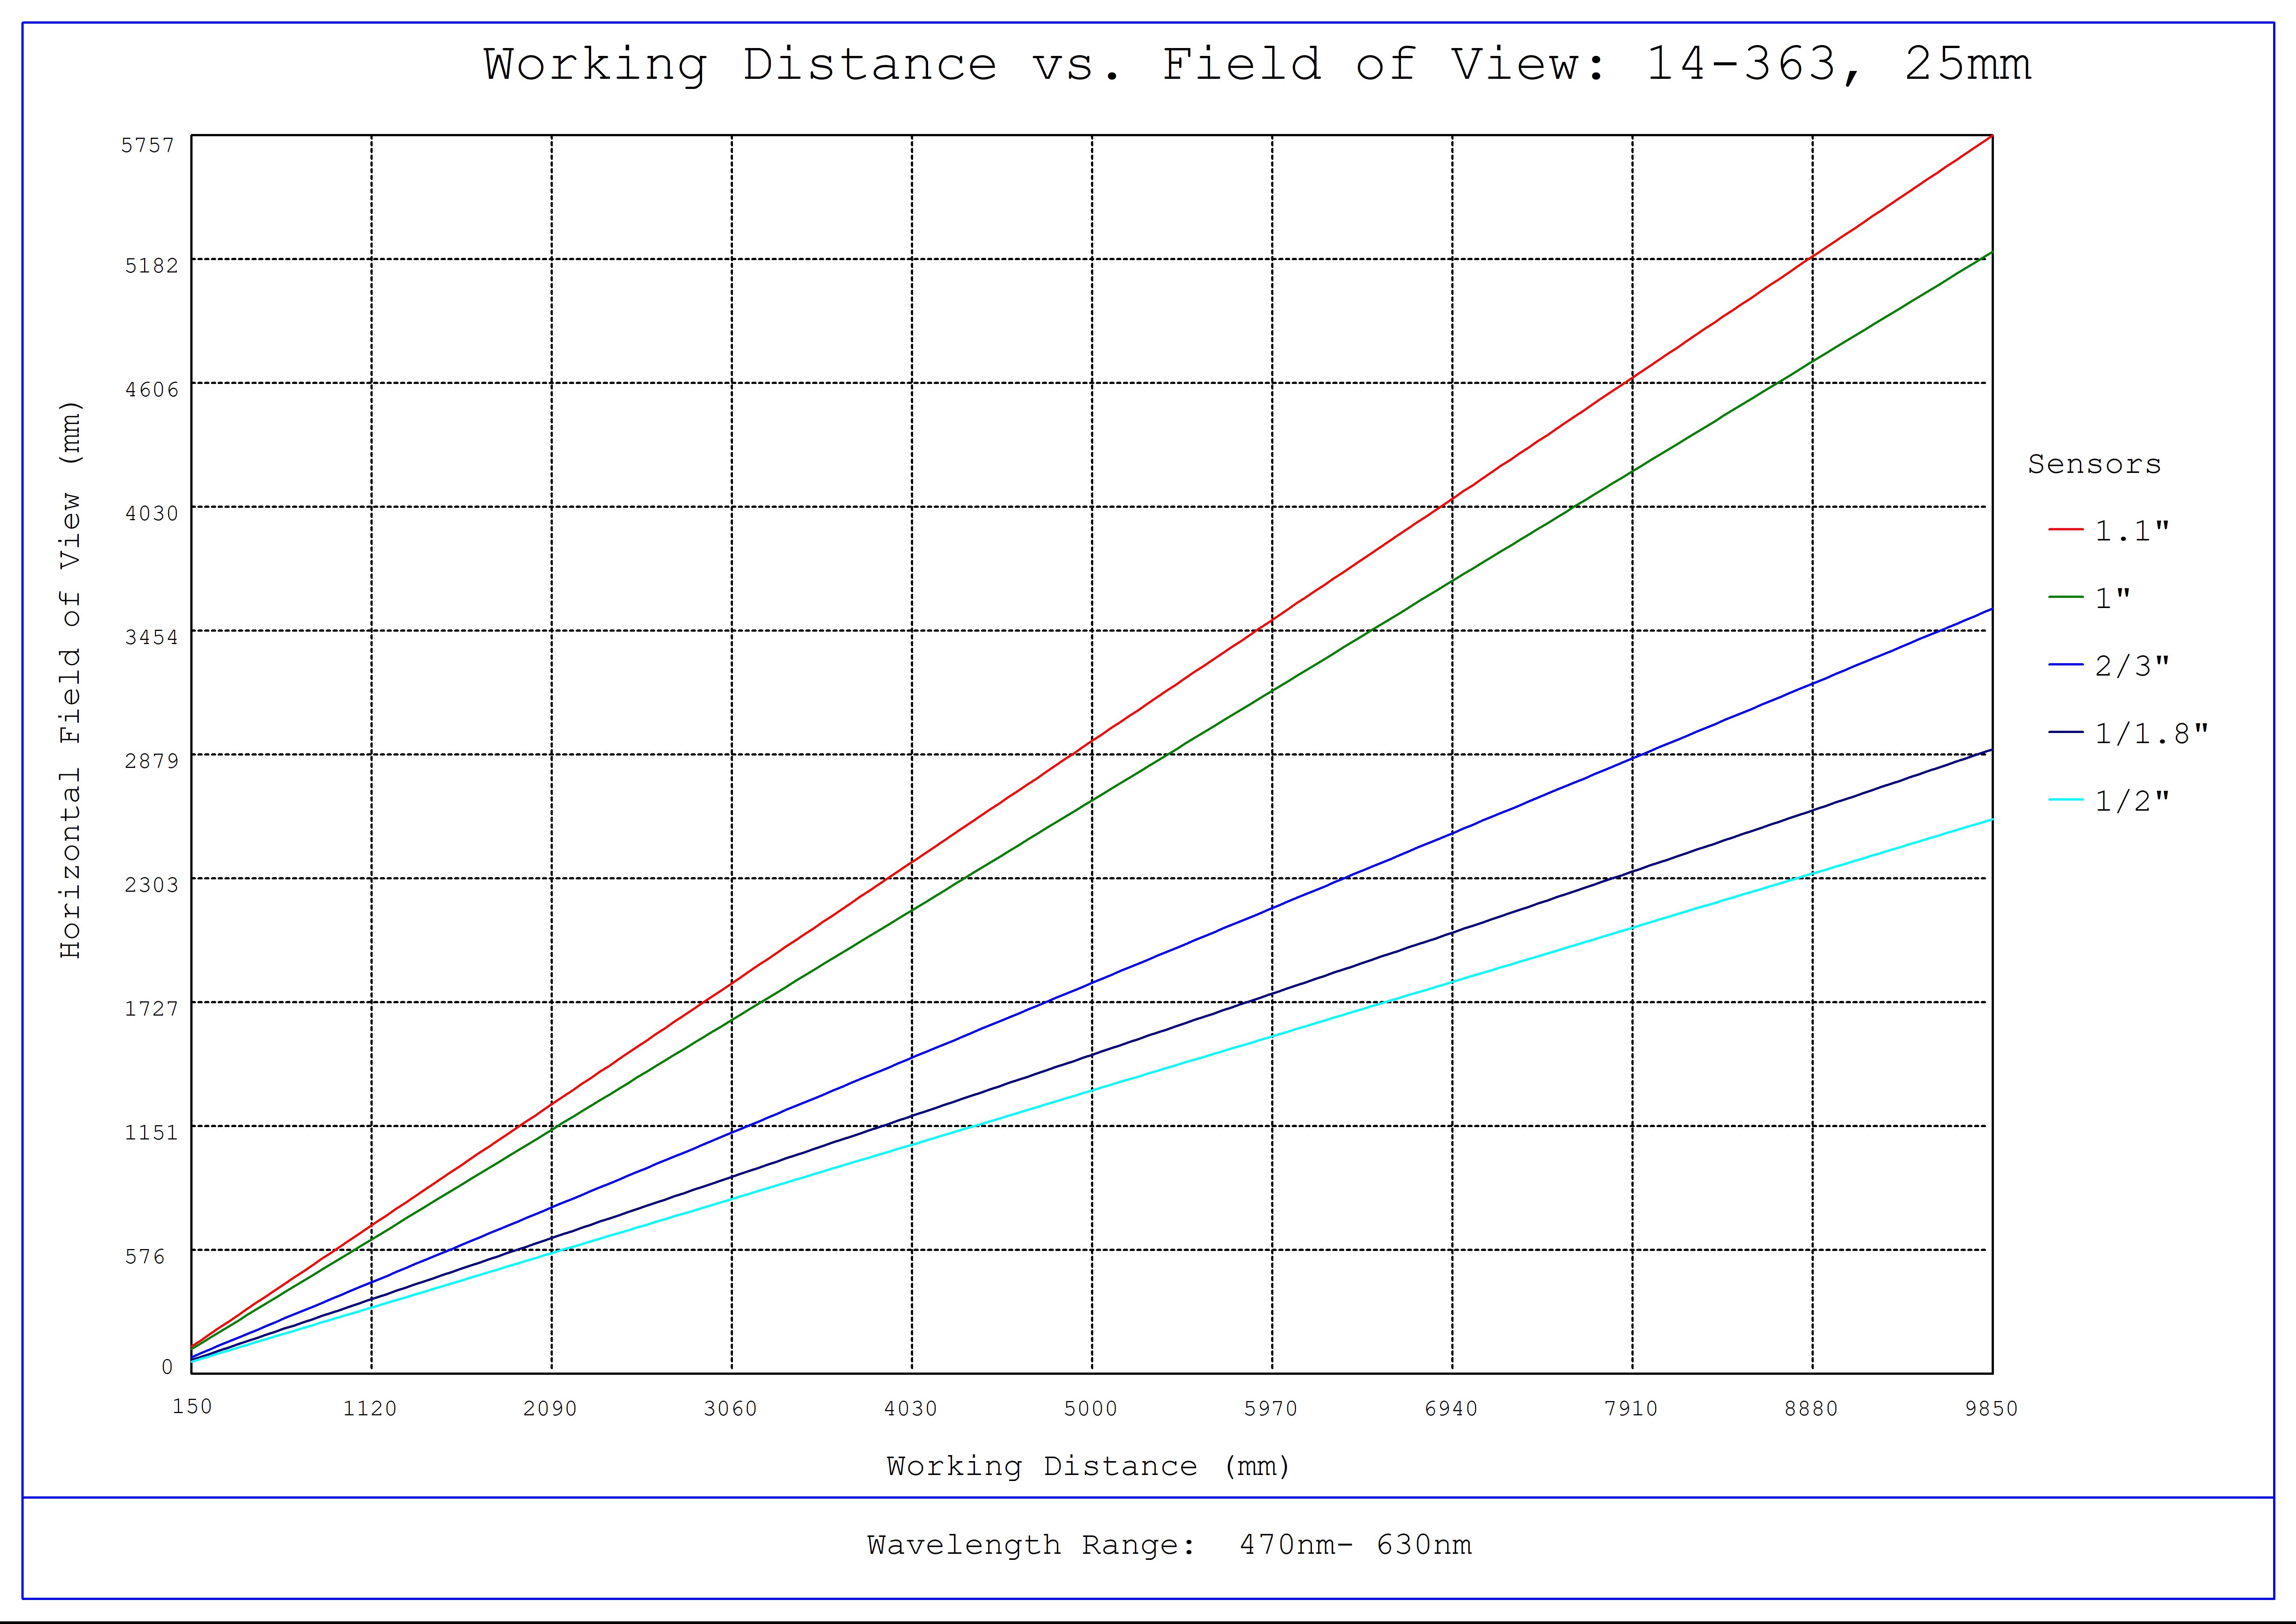 #14-363, 25mm LT Series Fixed Focal Length Lens, Working Distance versus Field of View Plot